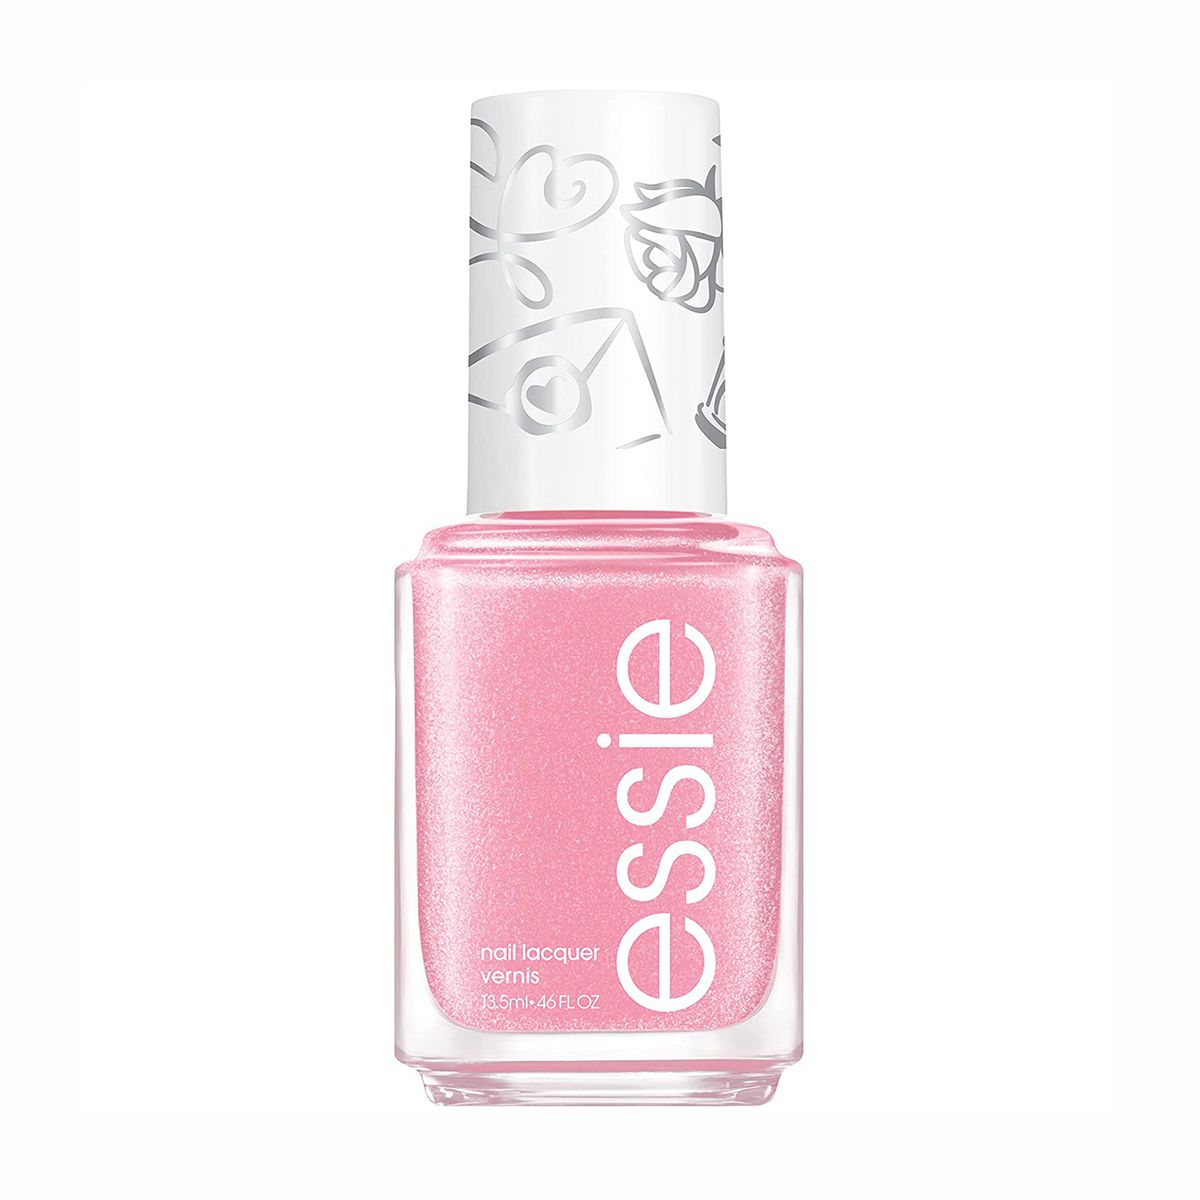 essie nail polish, limited edition valentine's day